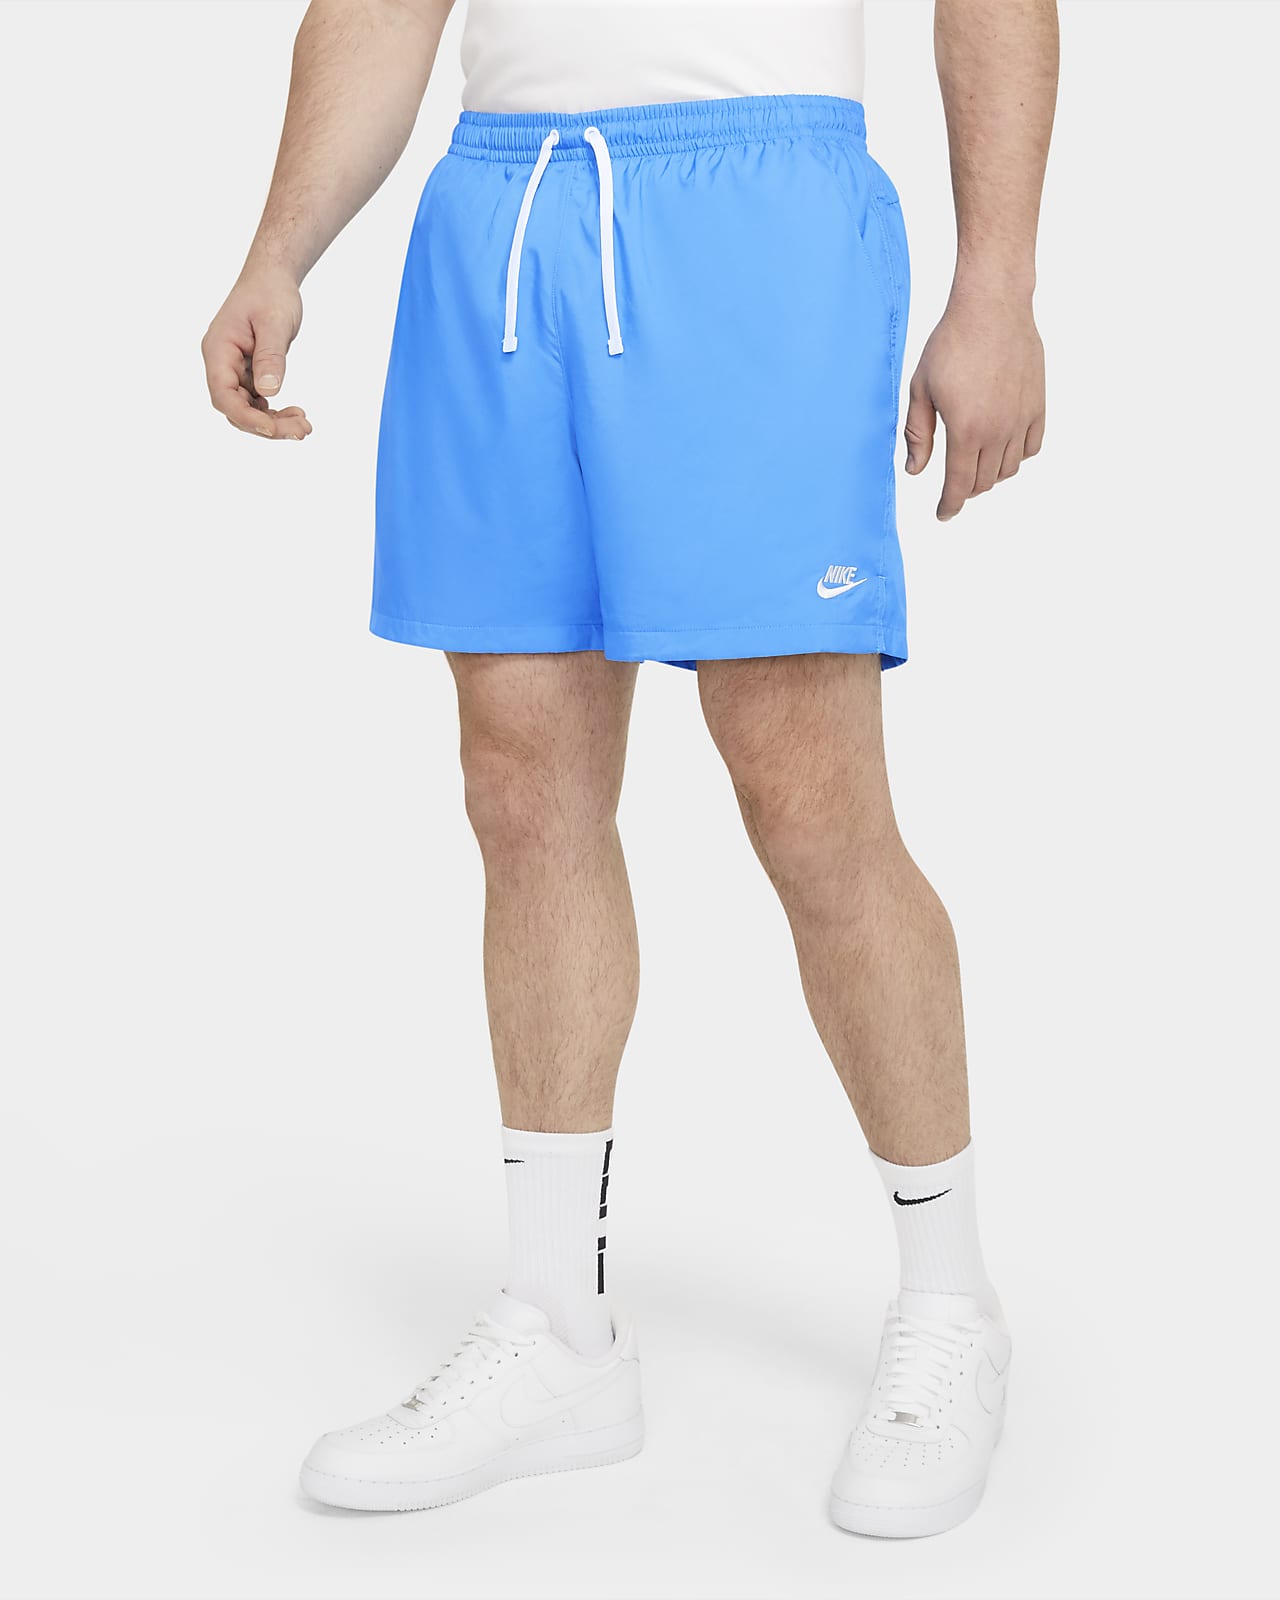 nike jordan shorts sale